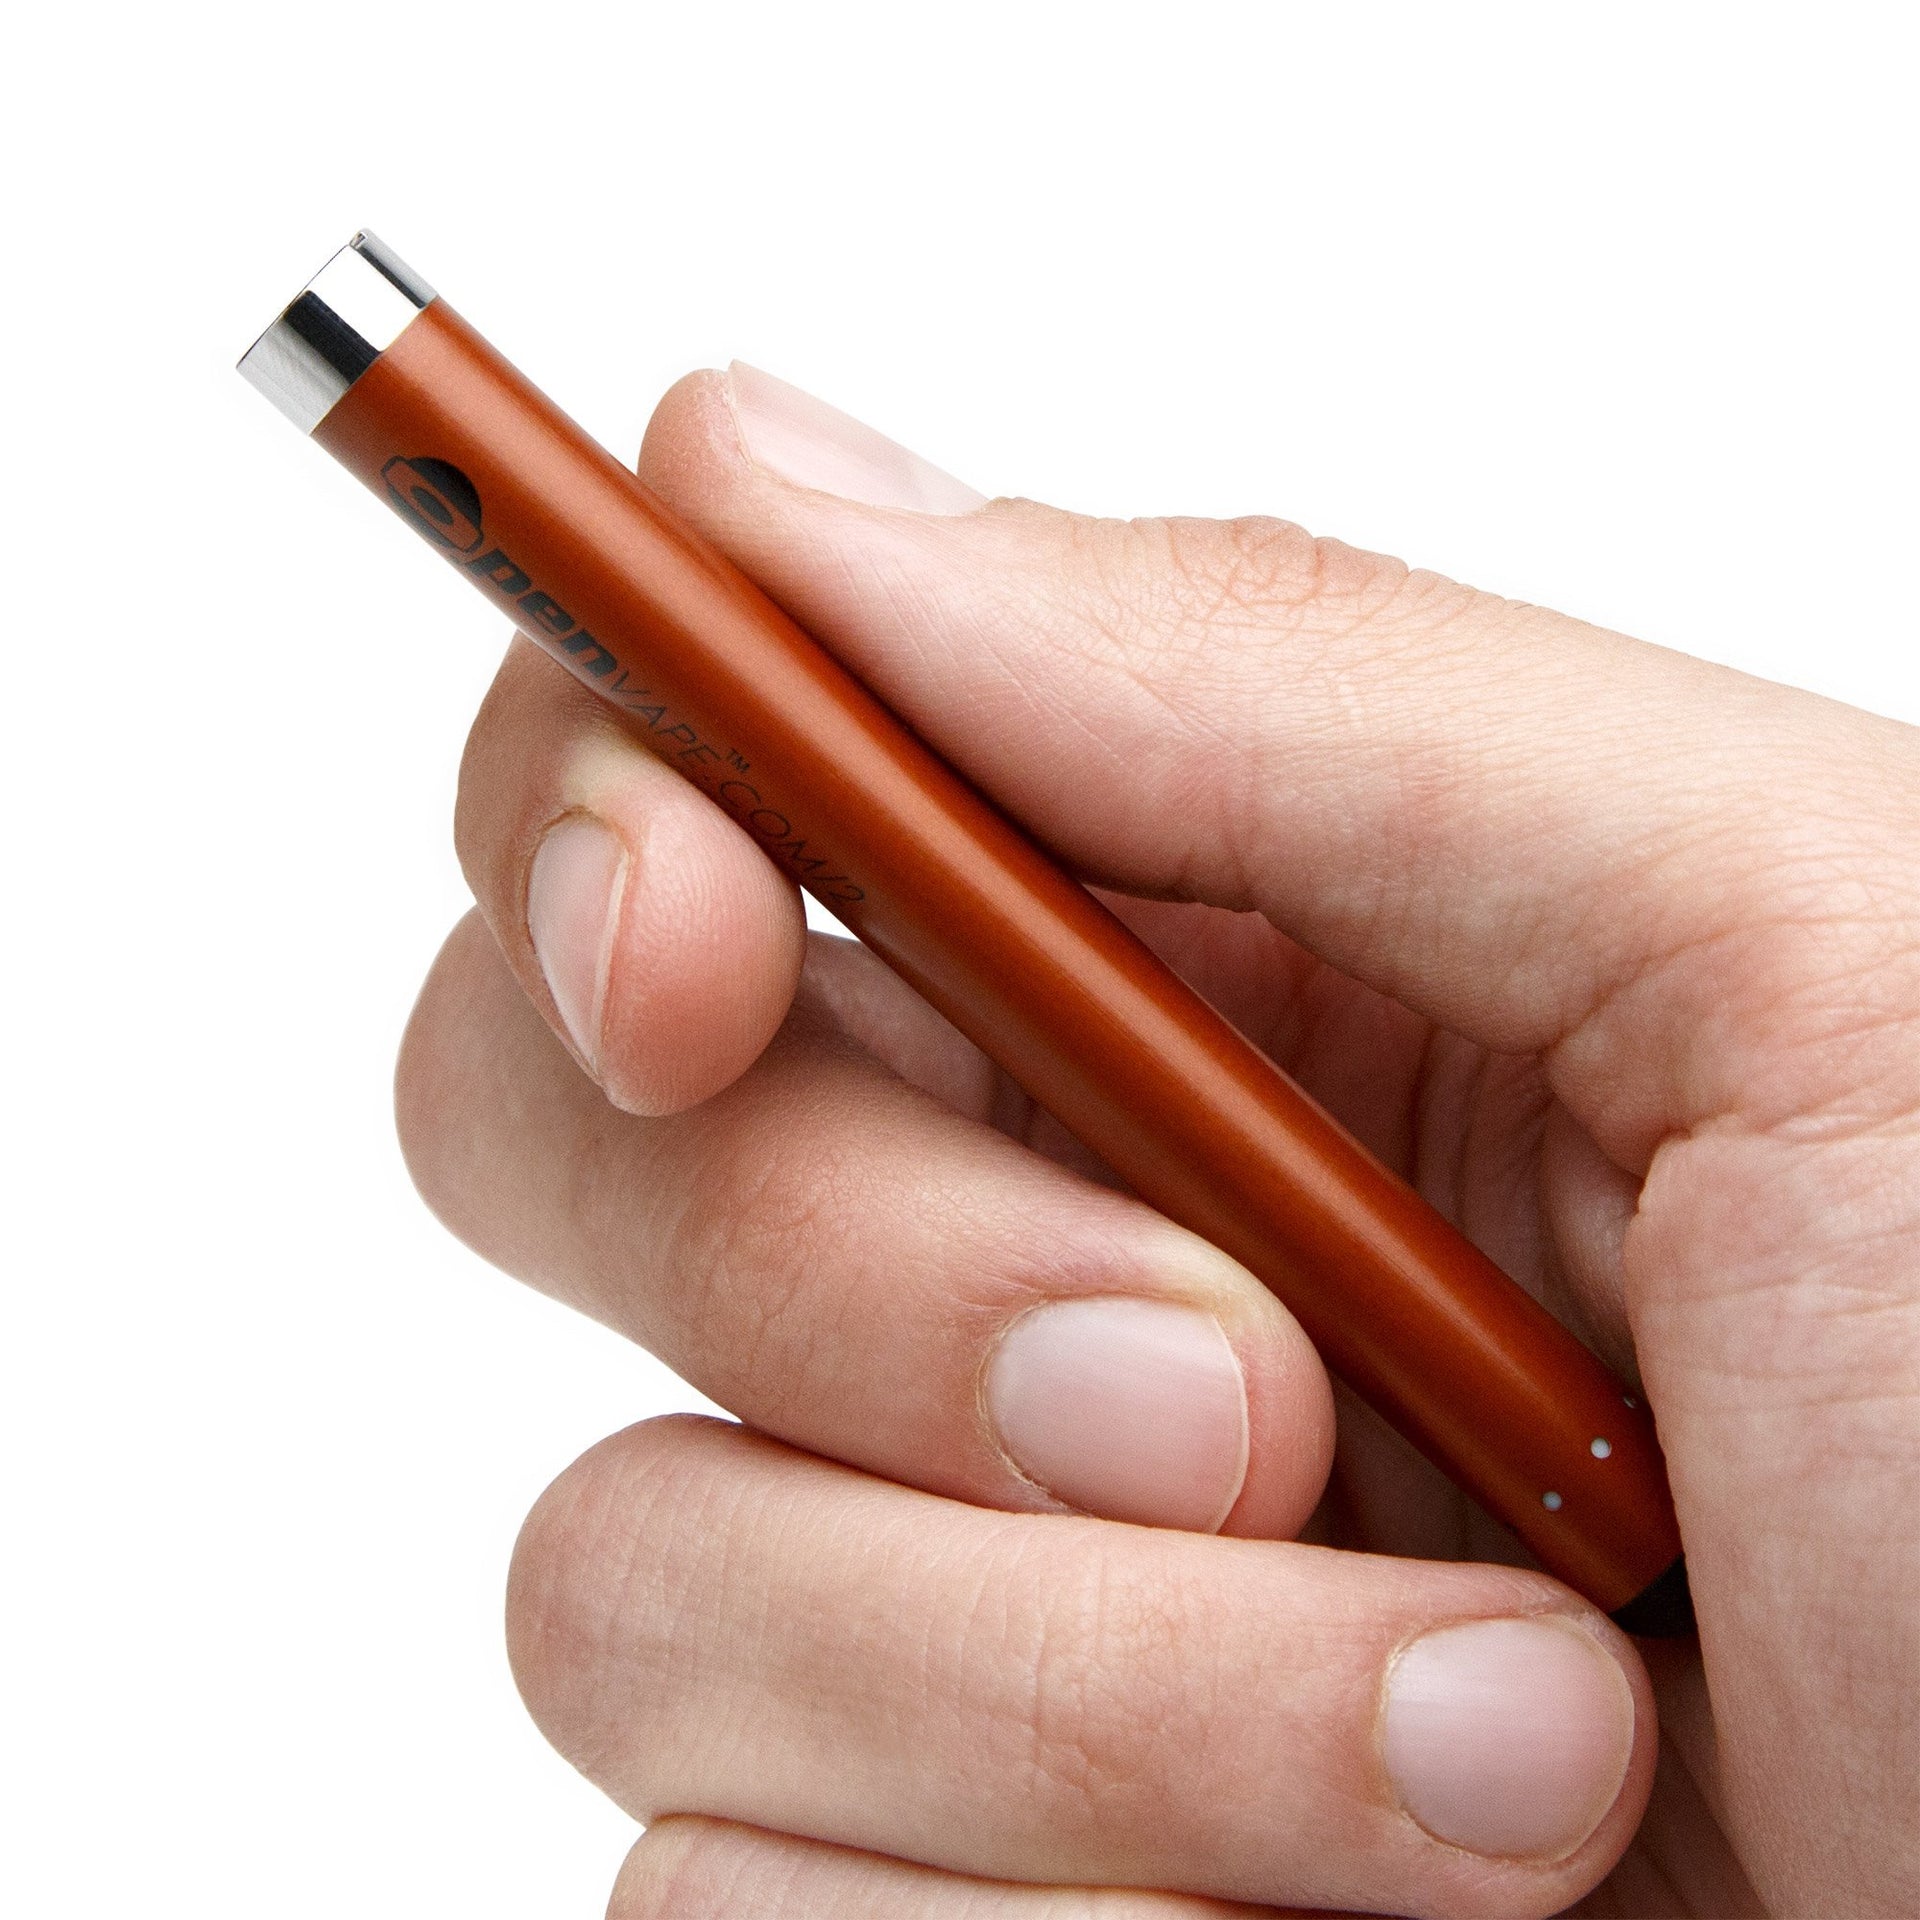 Variable Voltage Vape Pen Battery - O.pen 2.0